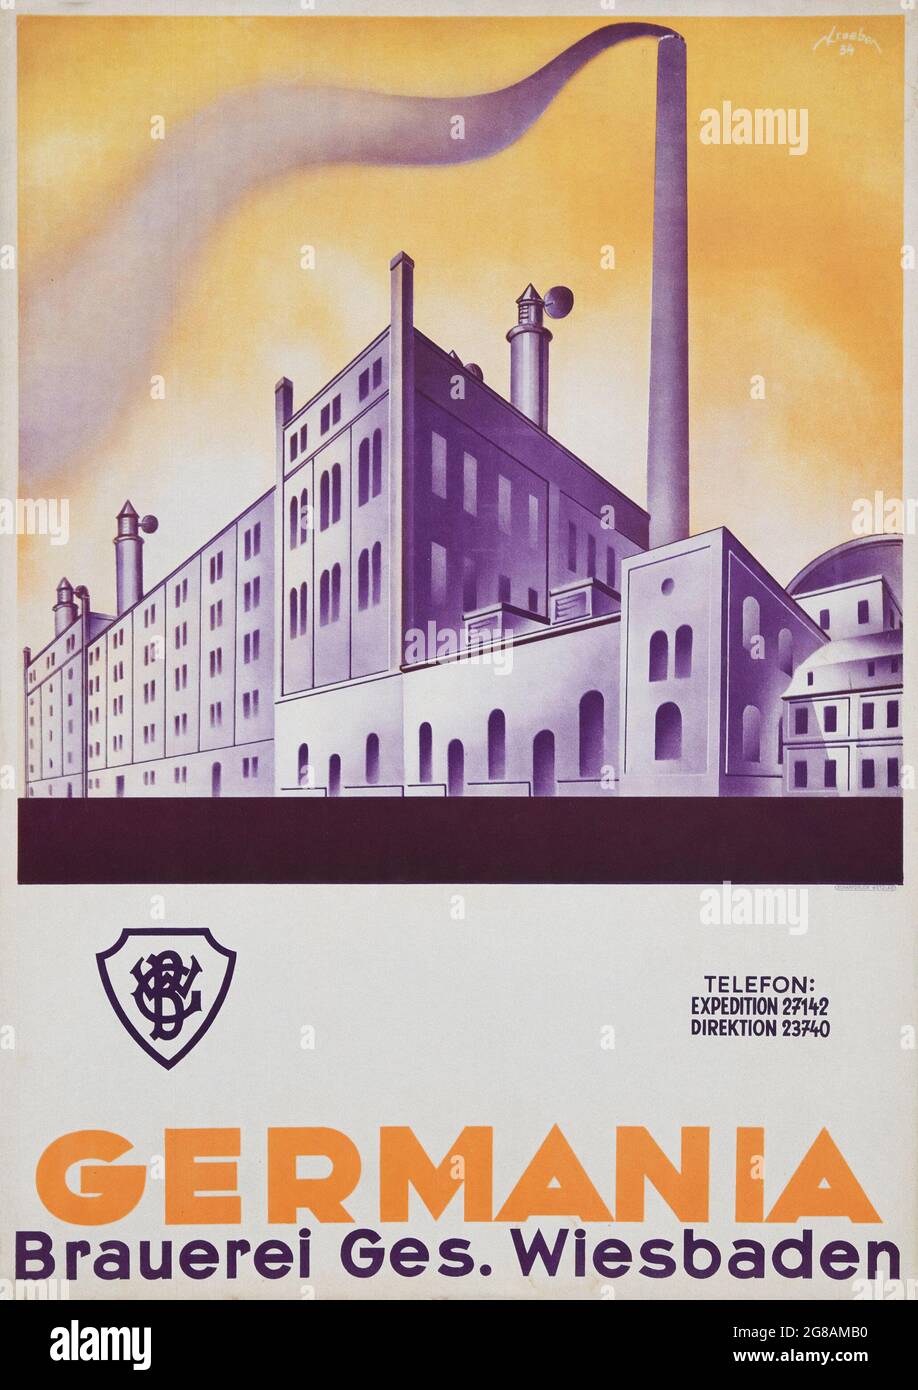 Vintage advertisement for alcohol. GERMANIA BRAUEREI GES. WIESBADEN - VINTAGE CARDBOARD SIGN by Kröber Stock Photo